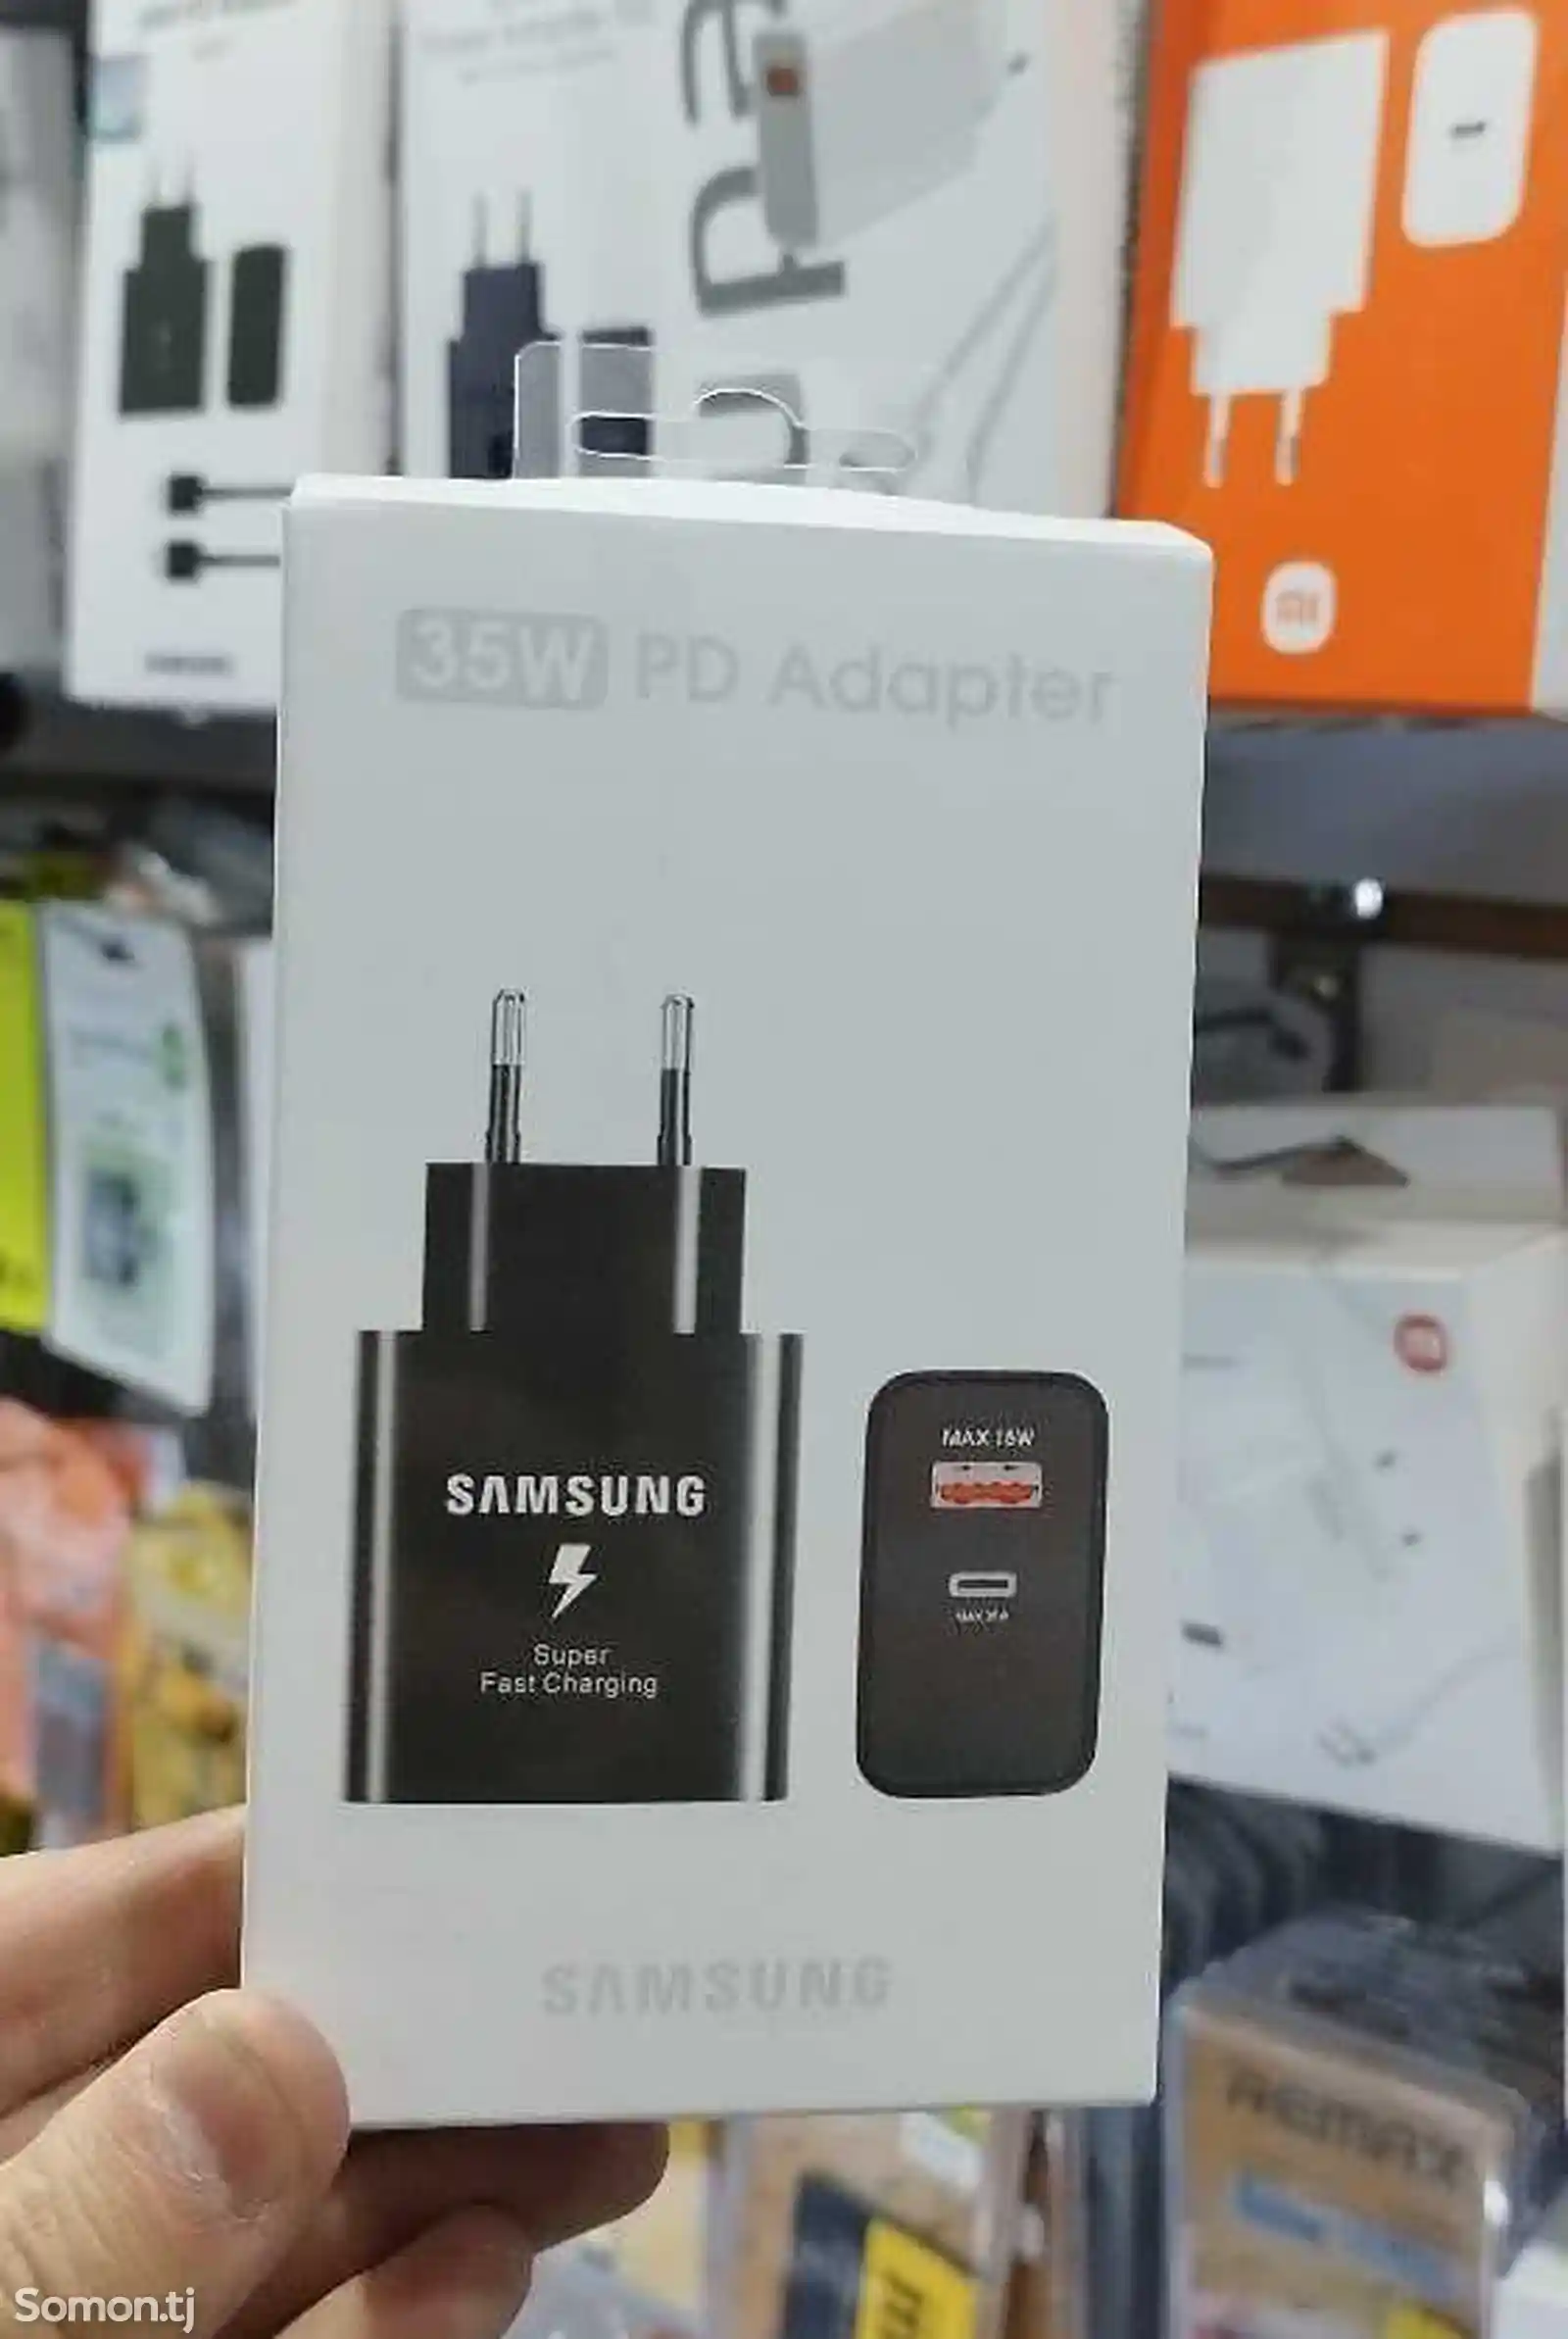 35W PD Adapter Samsung-1